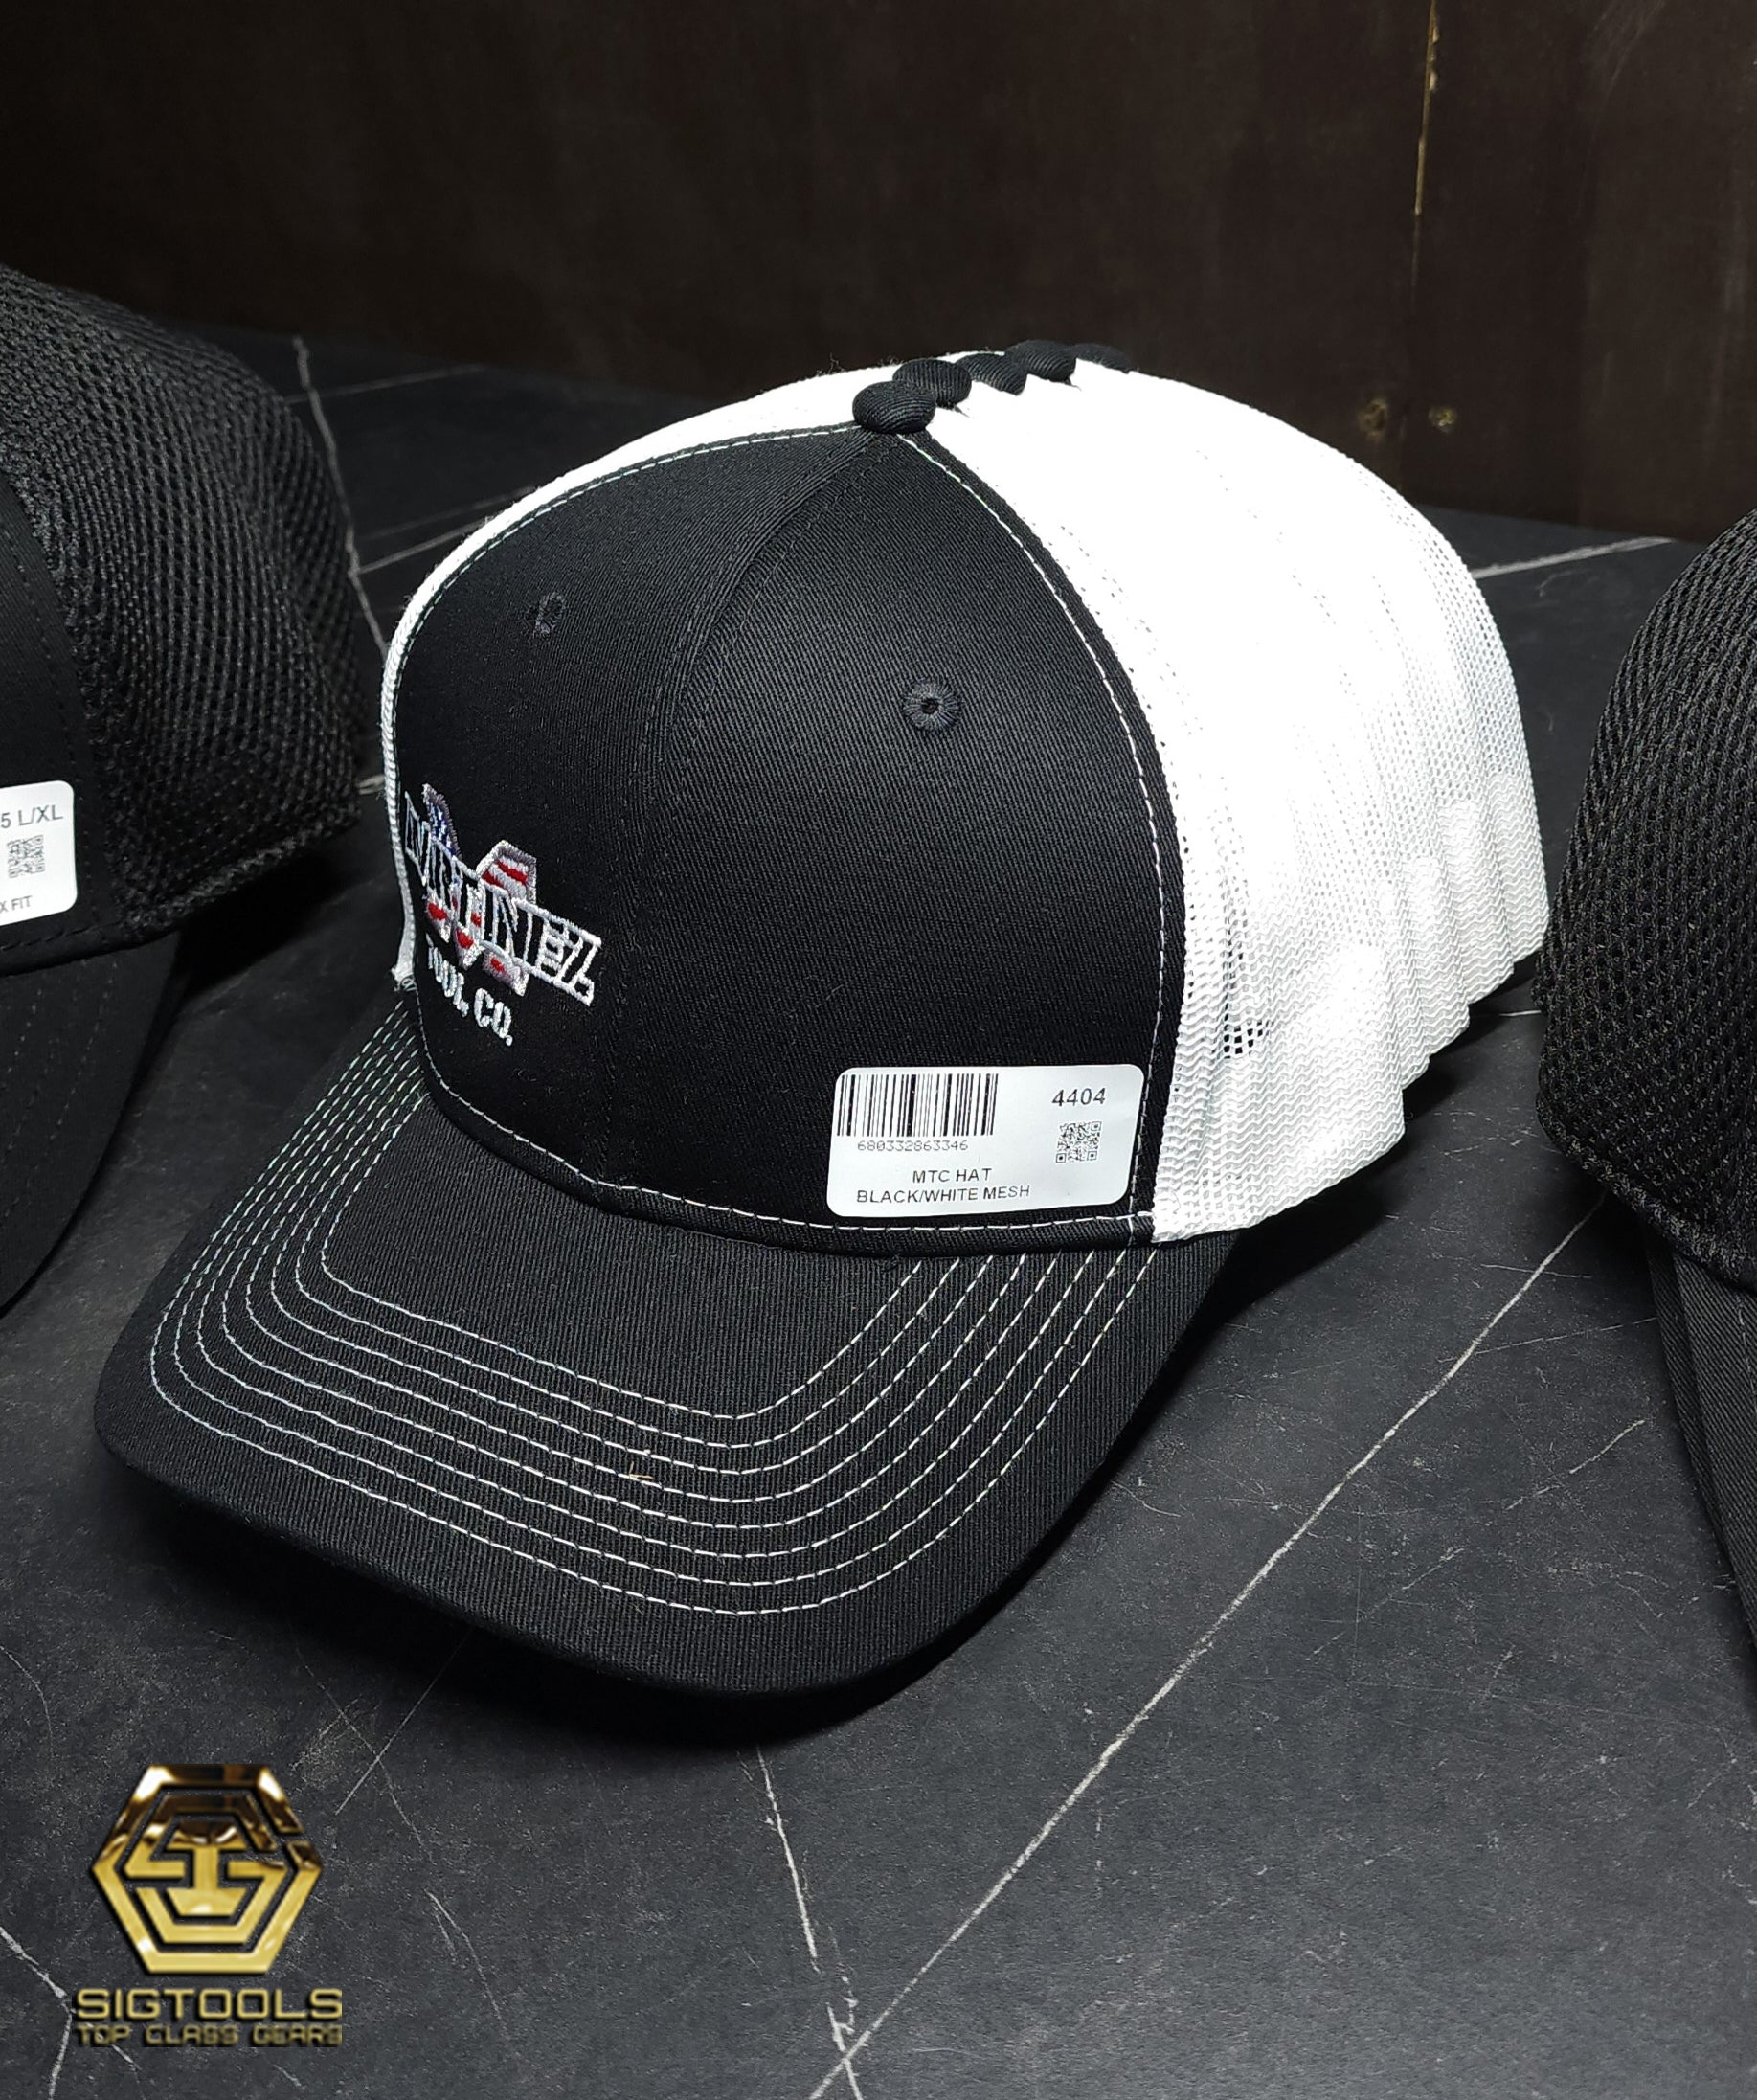 MTC Black/White Flex Fit Mesh Hat